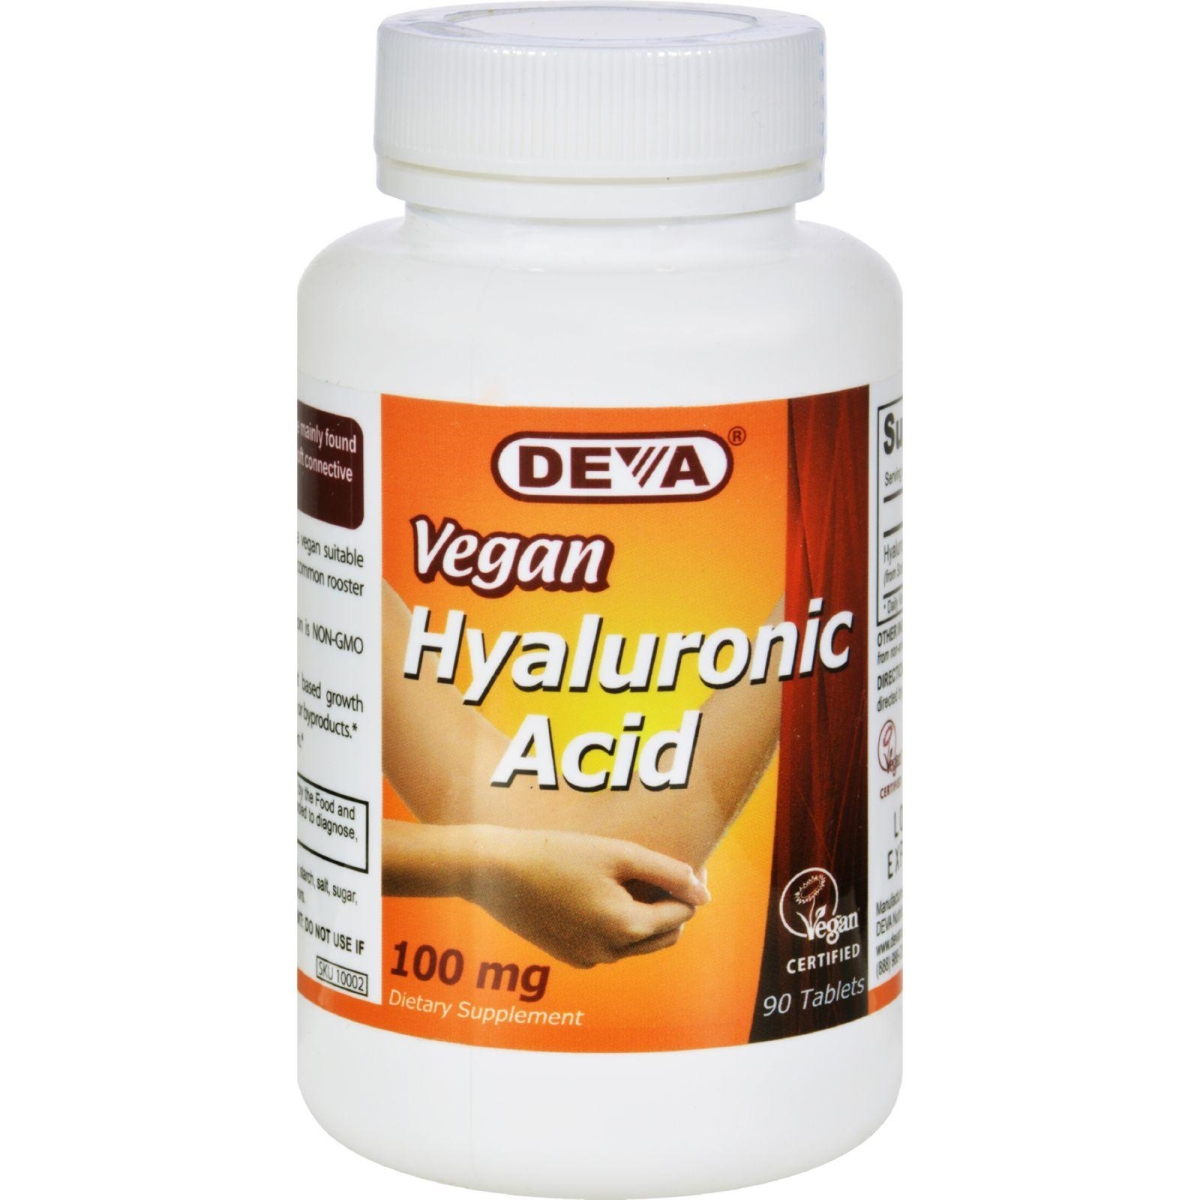 Hg1582444 100 Mg Vitamins Hyaluronic Acid - Vegan, 90 Tablets